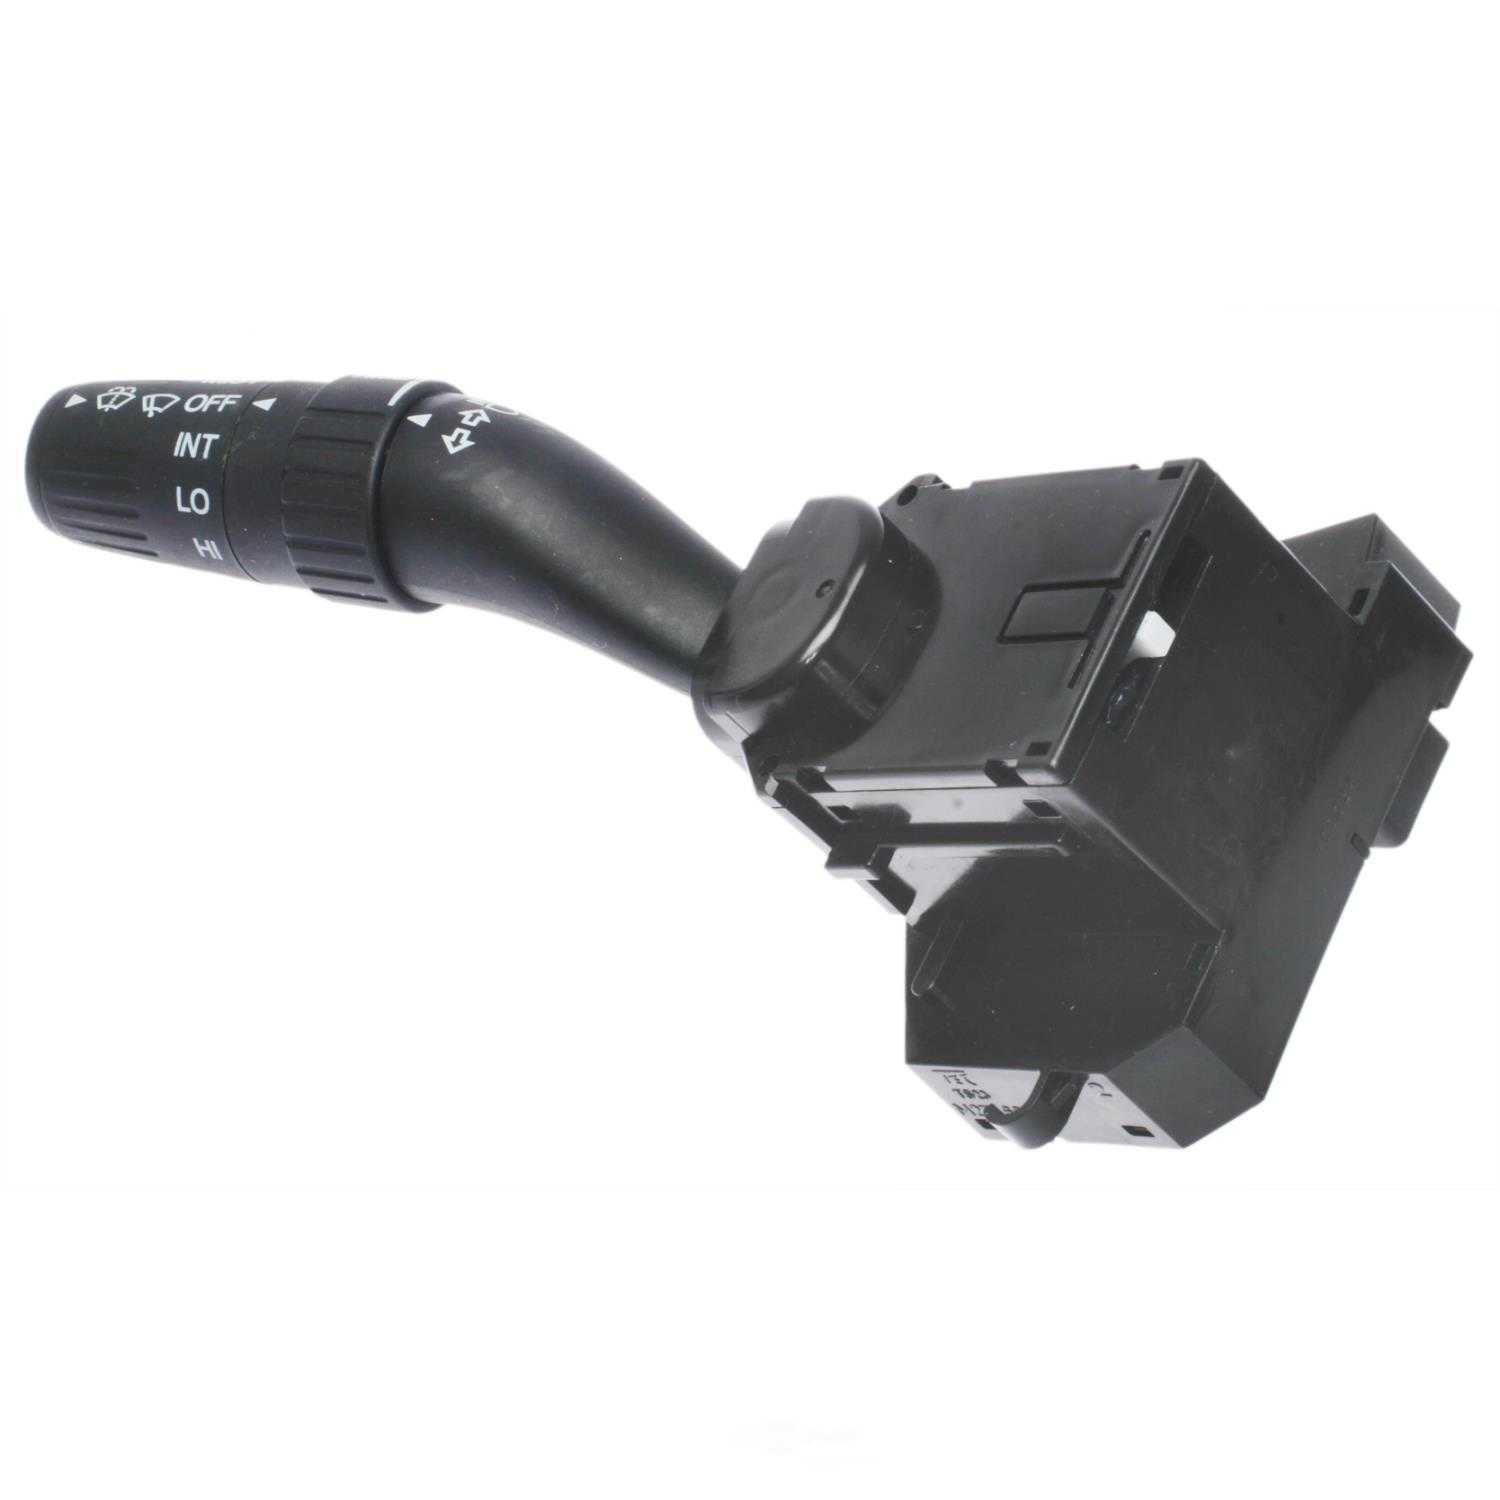 STANDARD MOTOR PRODUCTS - Headlight Dimmer Switch - STA CBS-1664